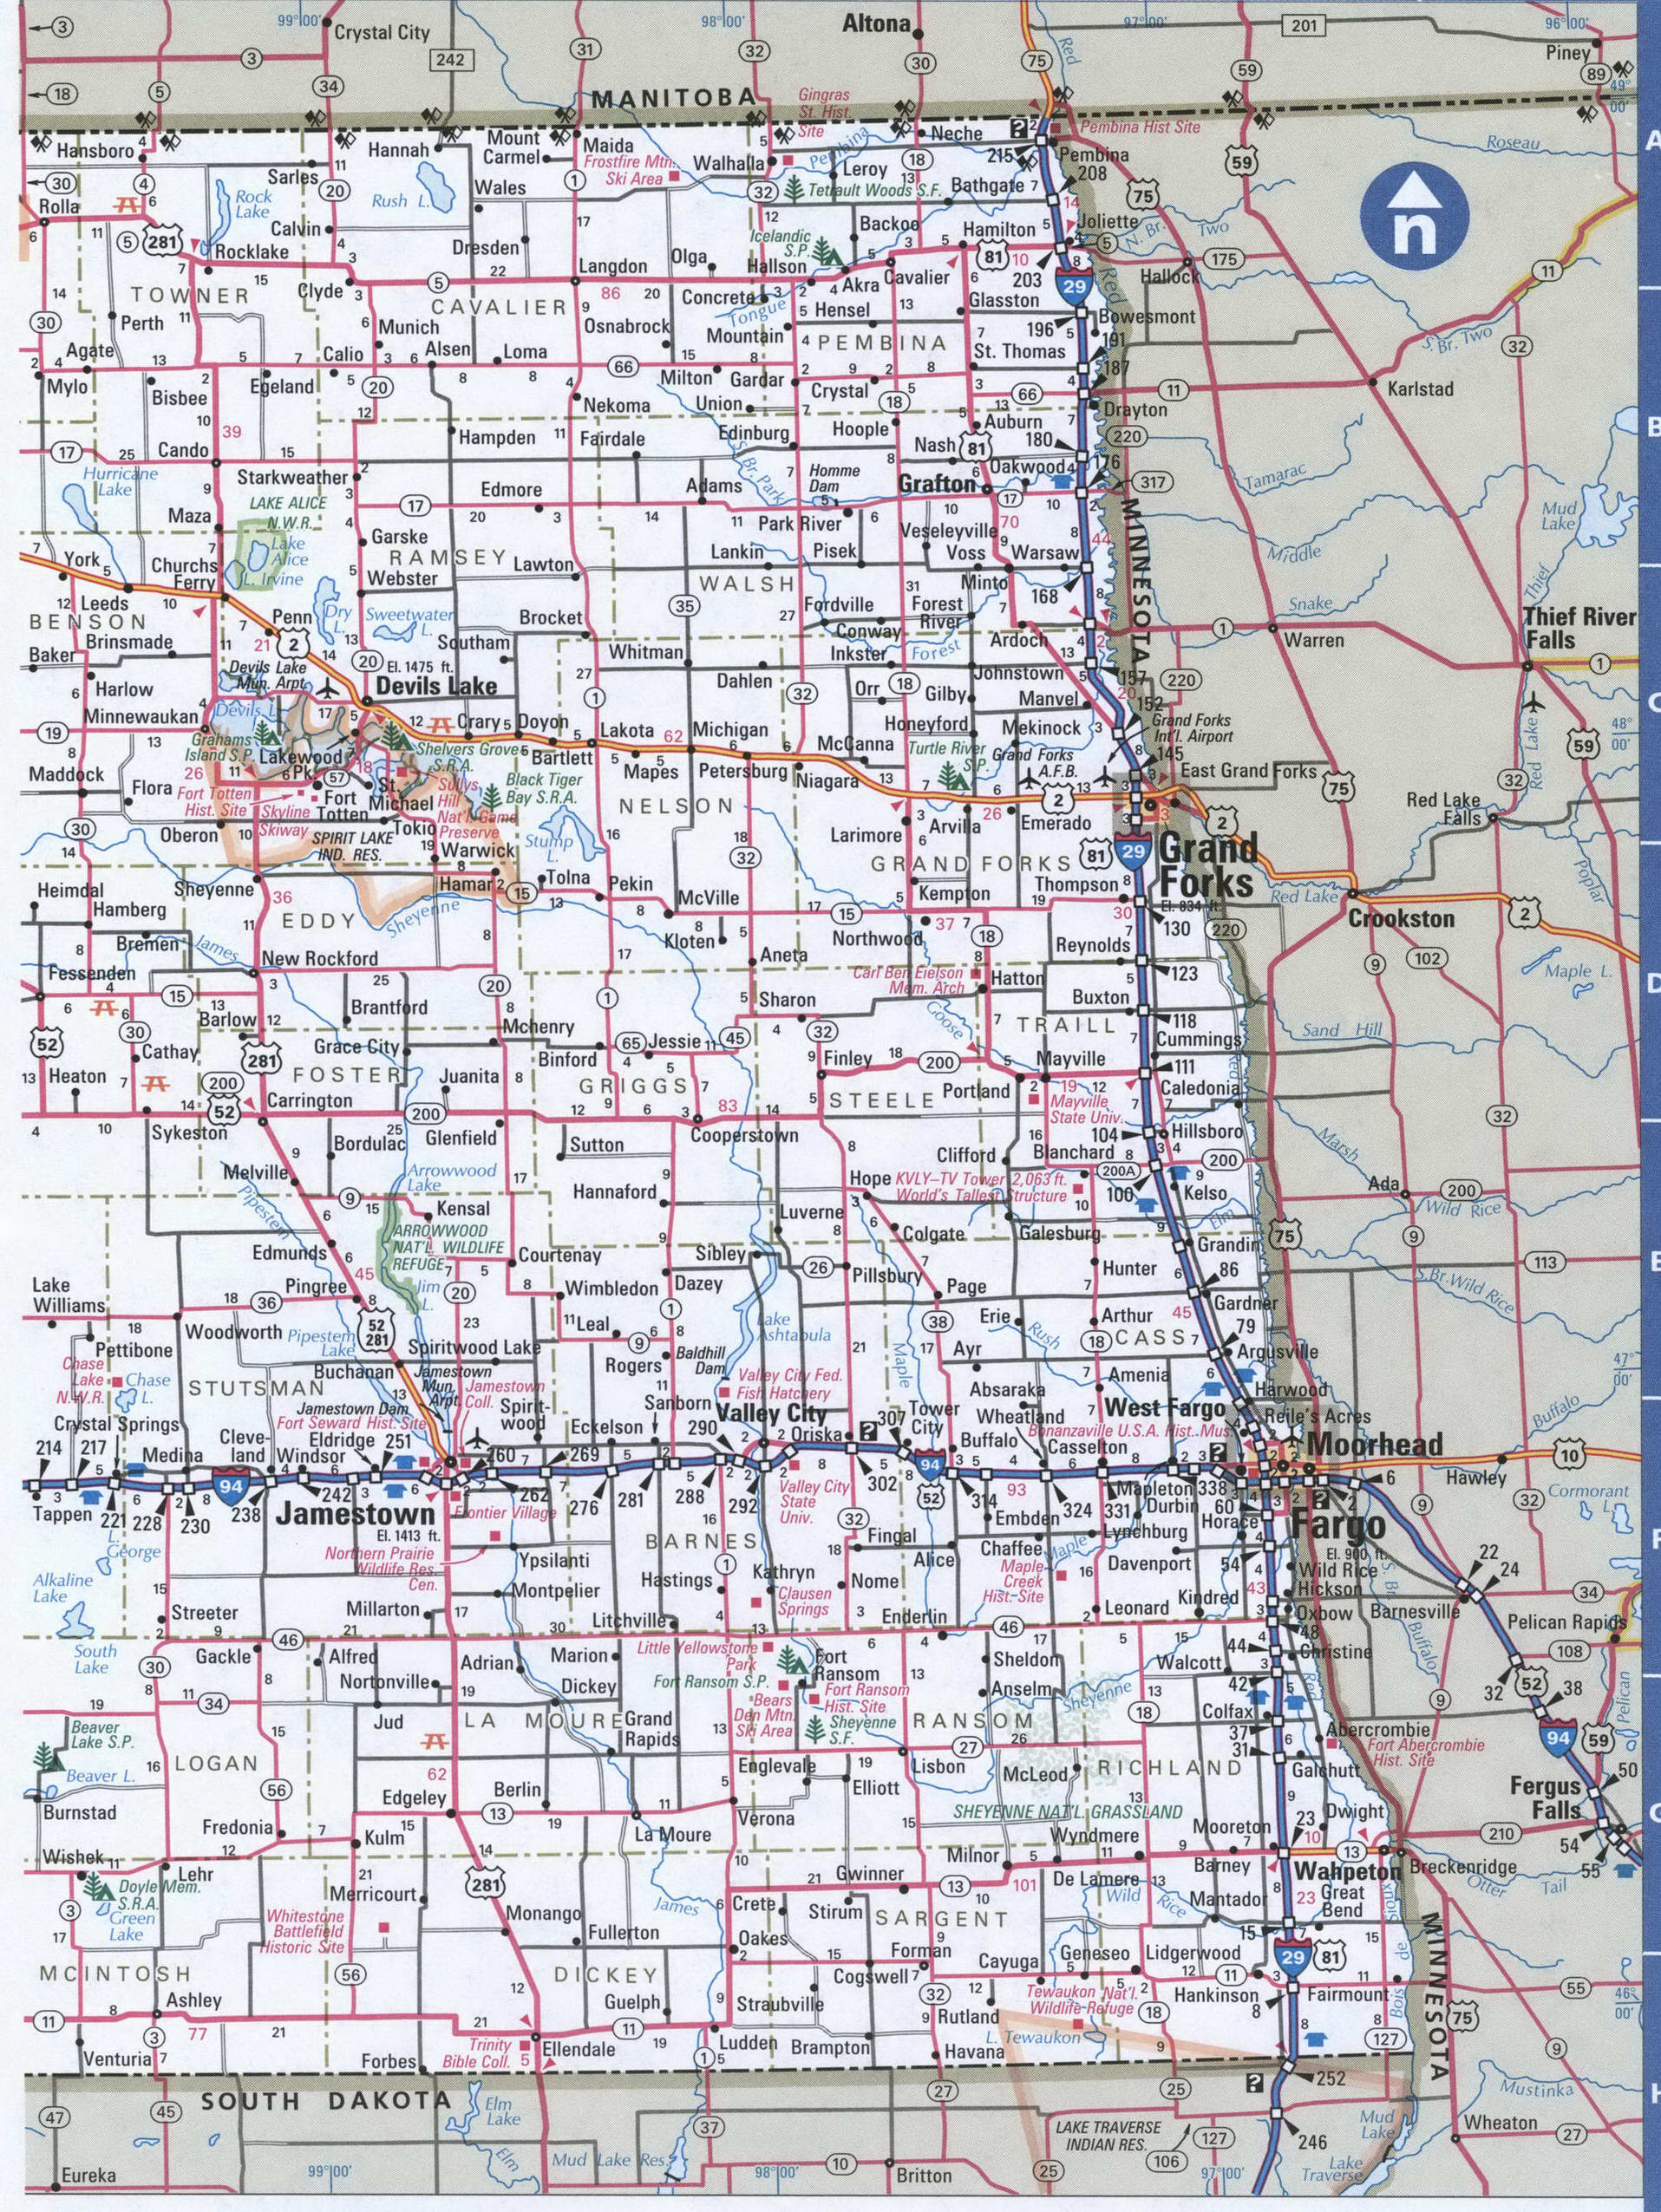 North Dakota roads map